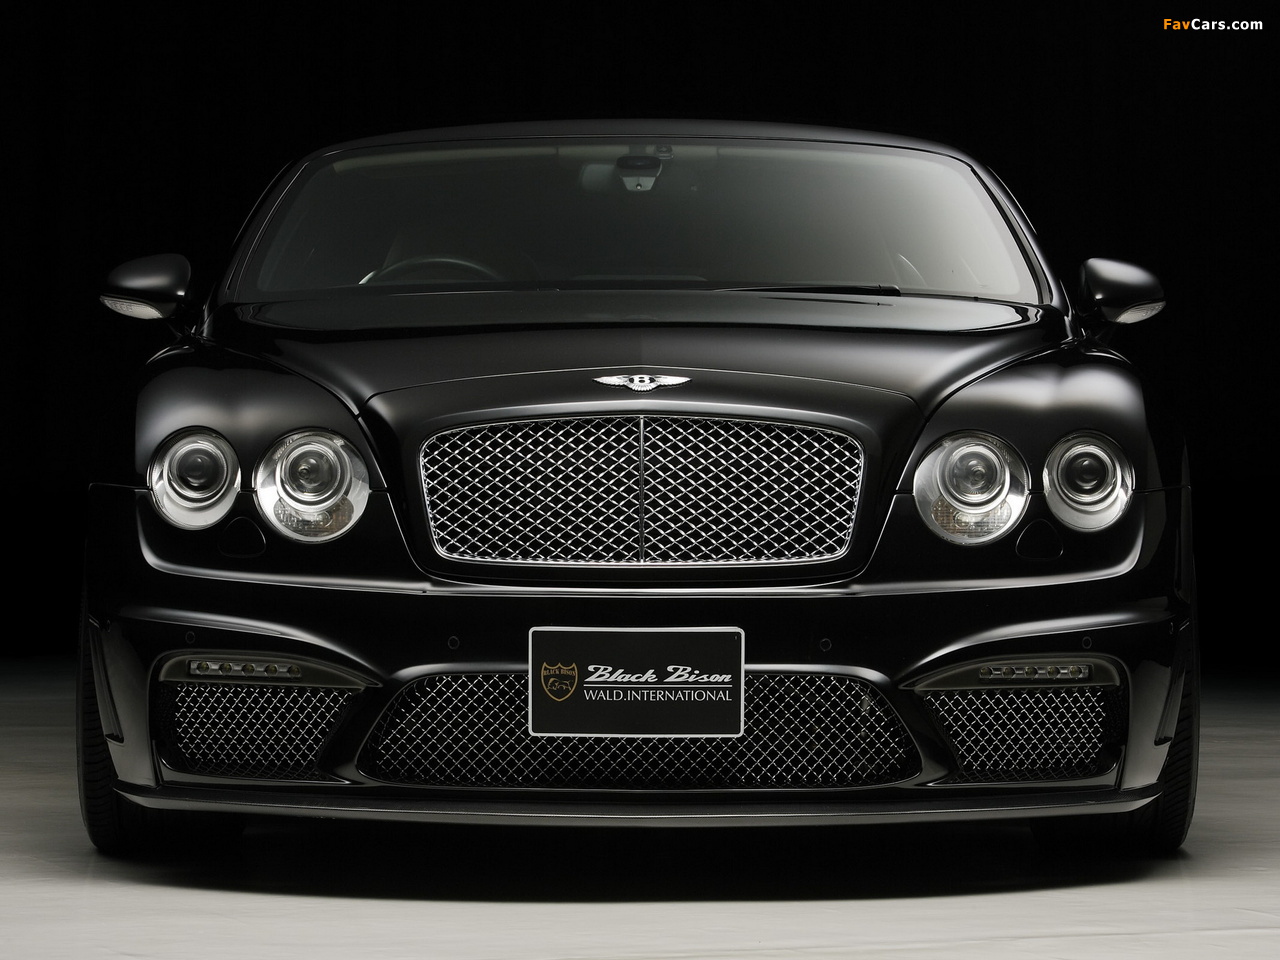 WALD Bentley Continental GT Black Bison Edition 2010 photos (1280 x 960)